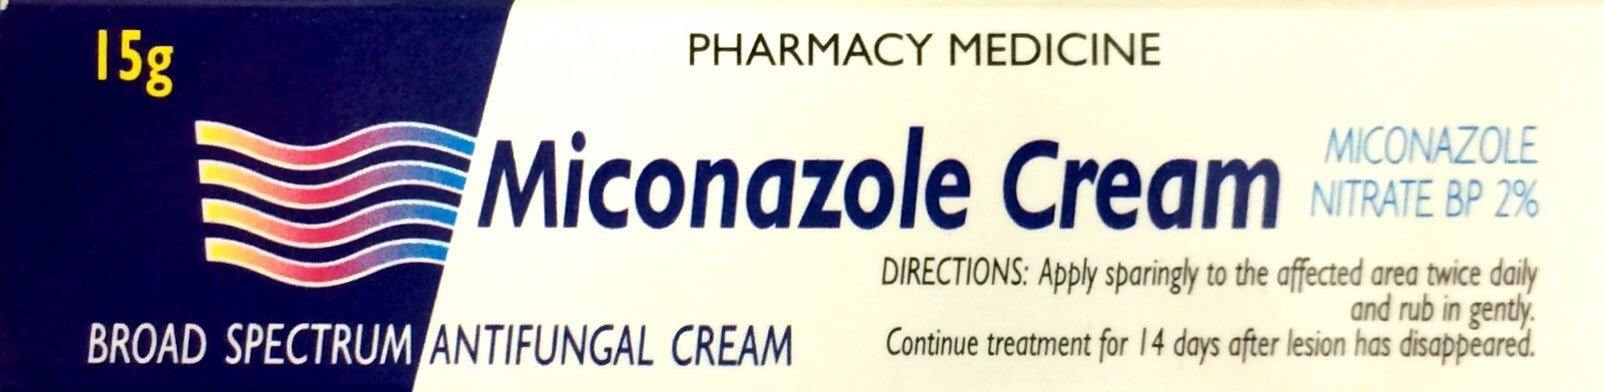 Miconazole Cream Miconazole Nitrate BP 2% 15g Pharmacy Medicine